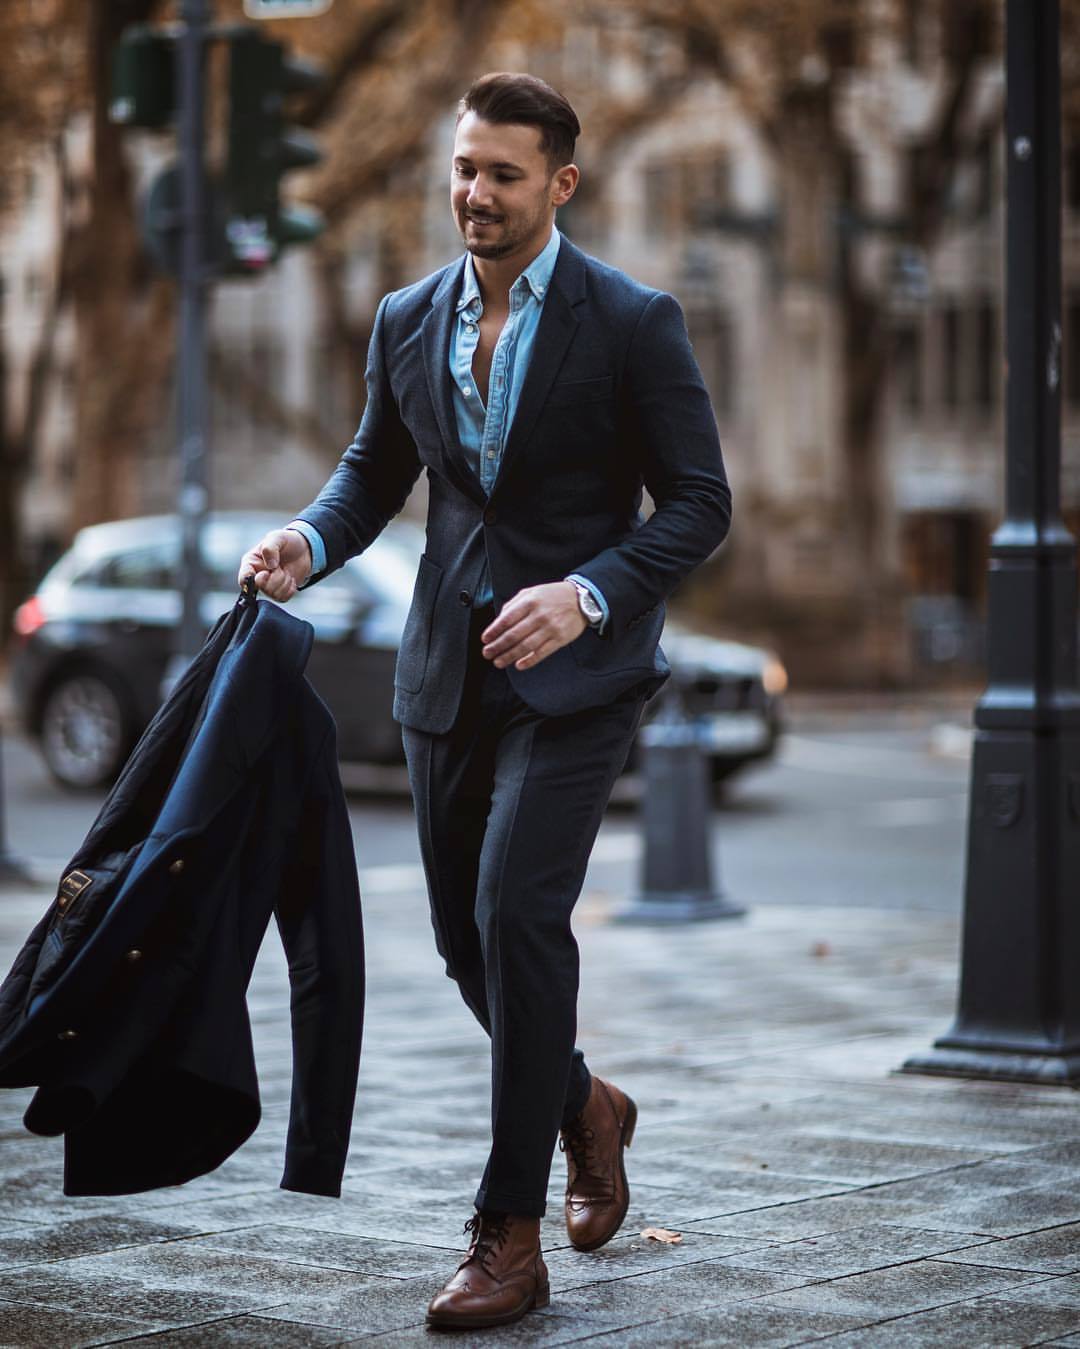 Common Suits - Olive suit and denim shirt. . . . . . . . #commonsuits  #sartoria #sartorial #madeinsingapore #menswear #solbiati #olivegreensuit  #gurkha #cottonsuit #bespoke #tailor #sgtailor #mensstyle #fashion  #gentleman #style #malefashion #